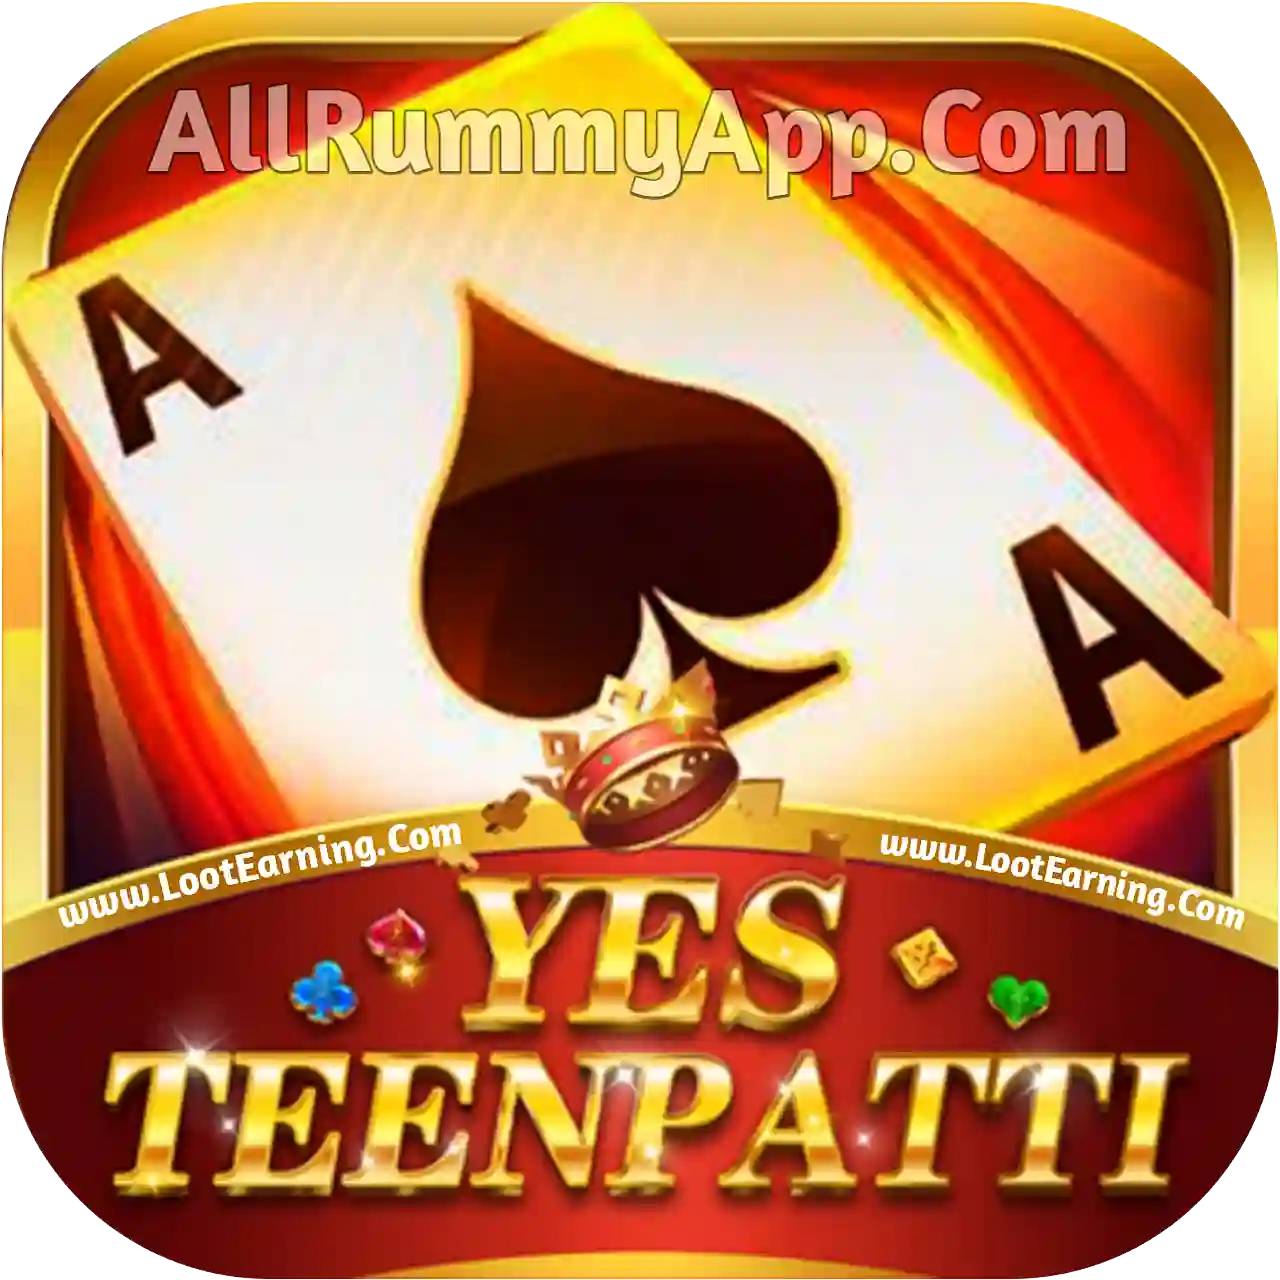 Teen Patti Yes Logo